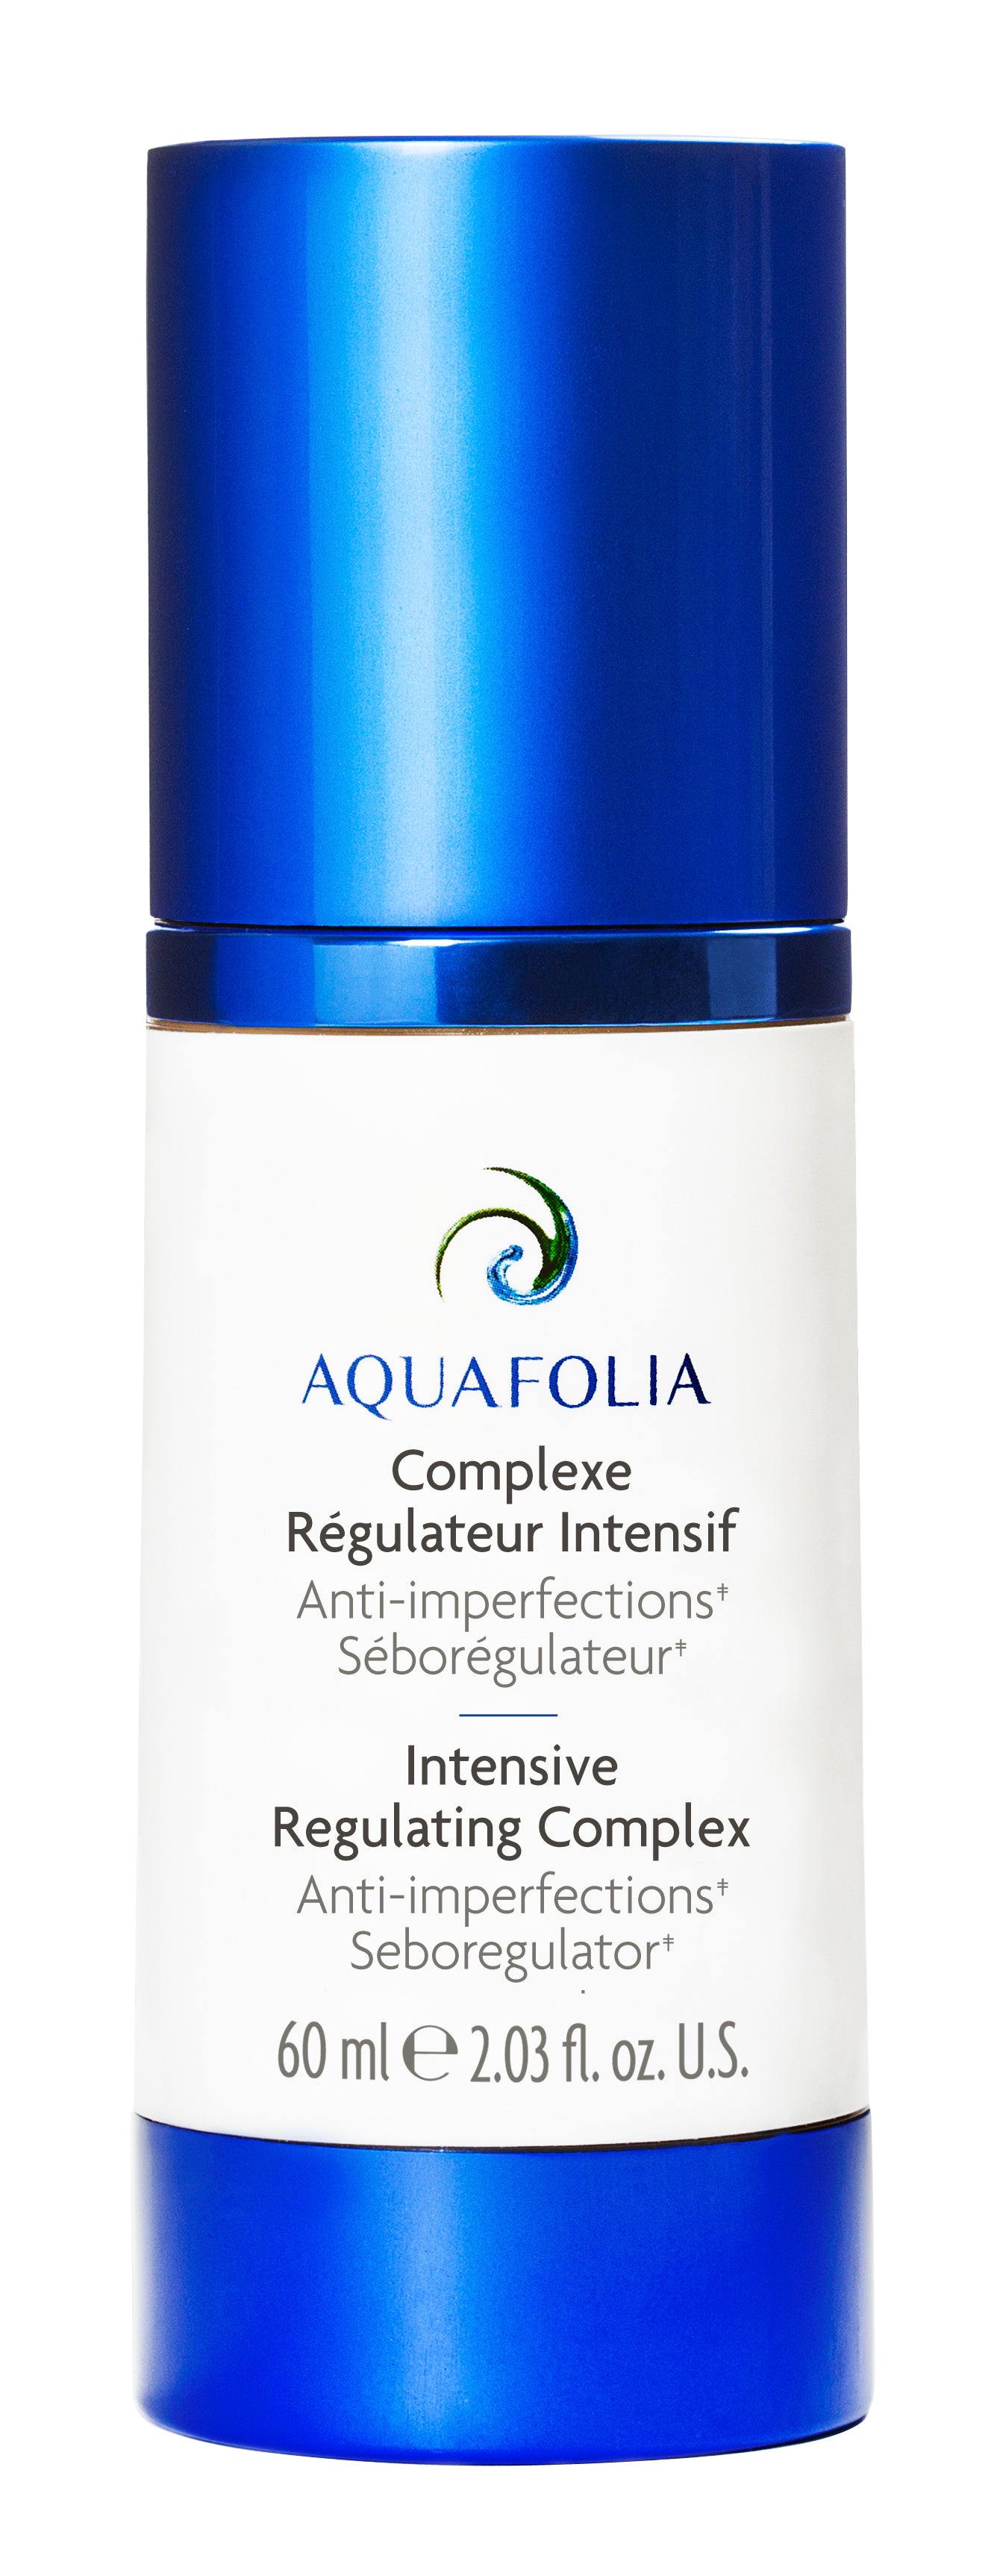 Aquafolia- Intensive Regulating Complex- Triple Action 3A Concept